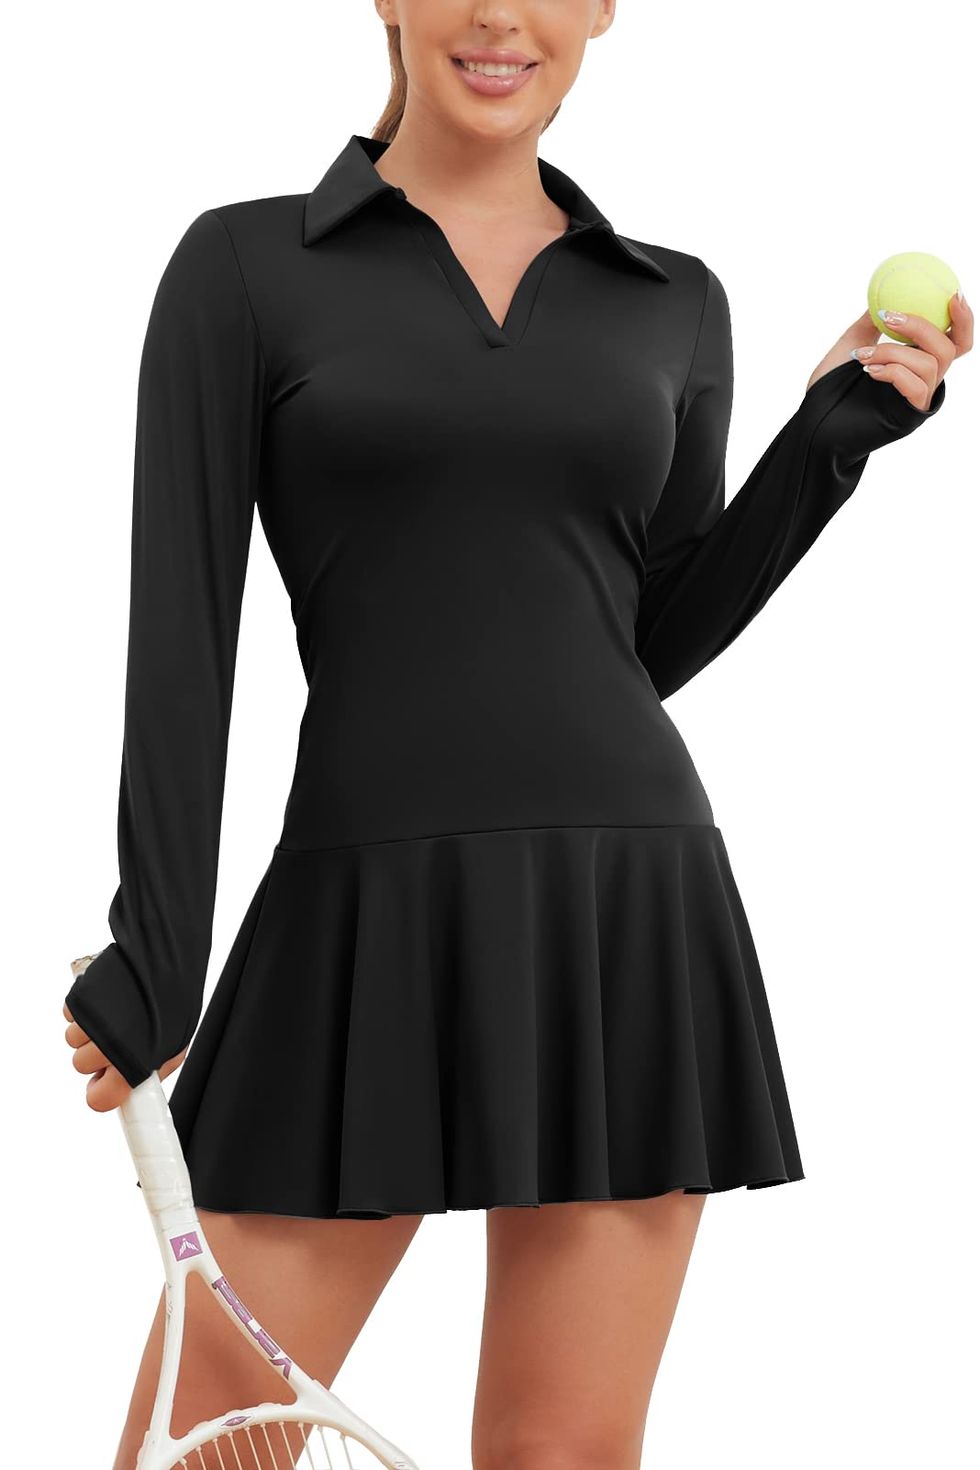 IUGA Womens Tennis Dress Built in Shorts & Bra Adjustable Straps